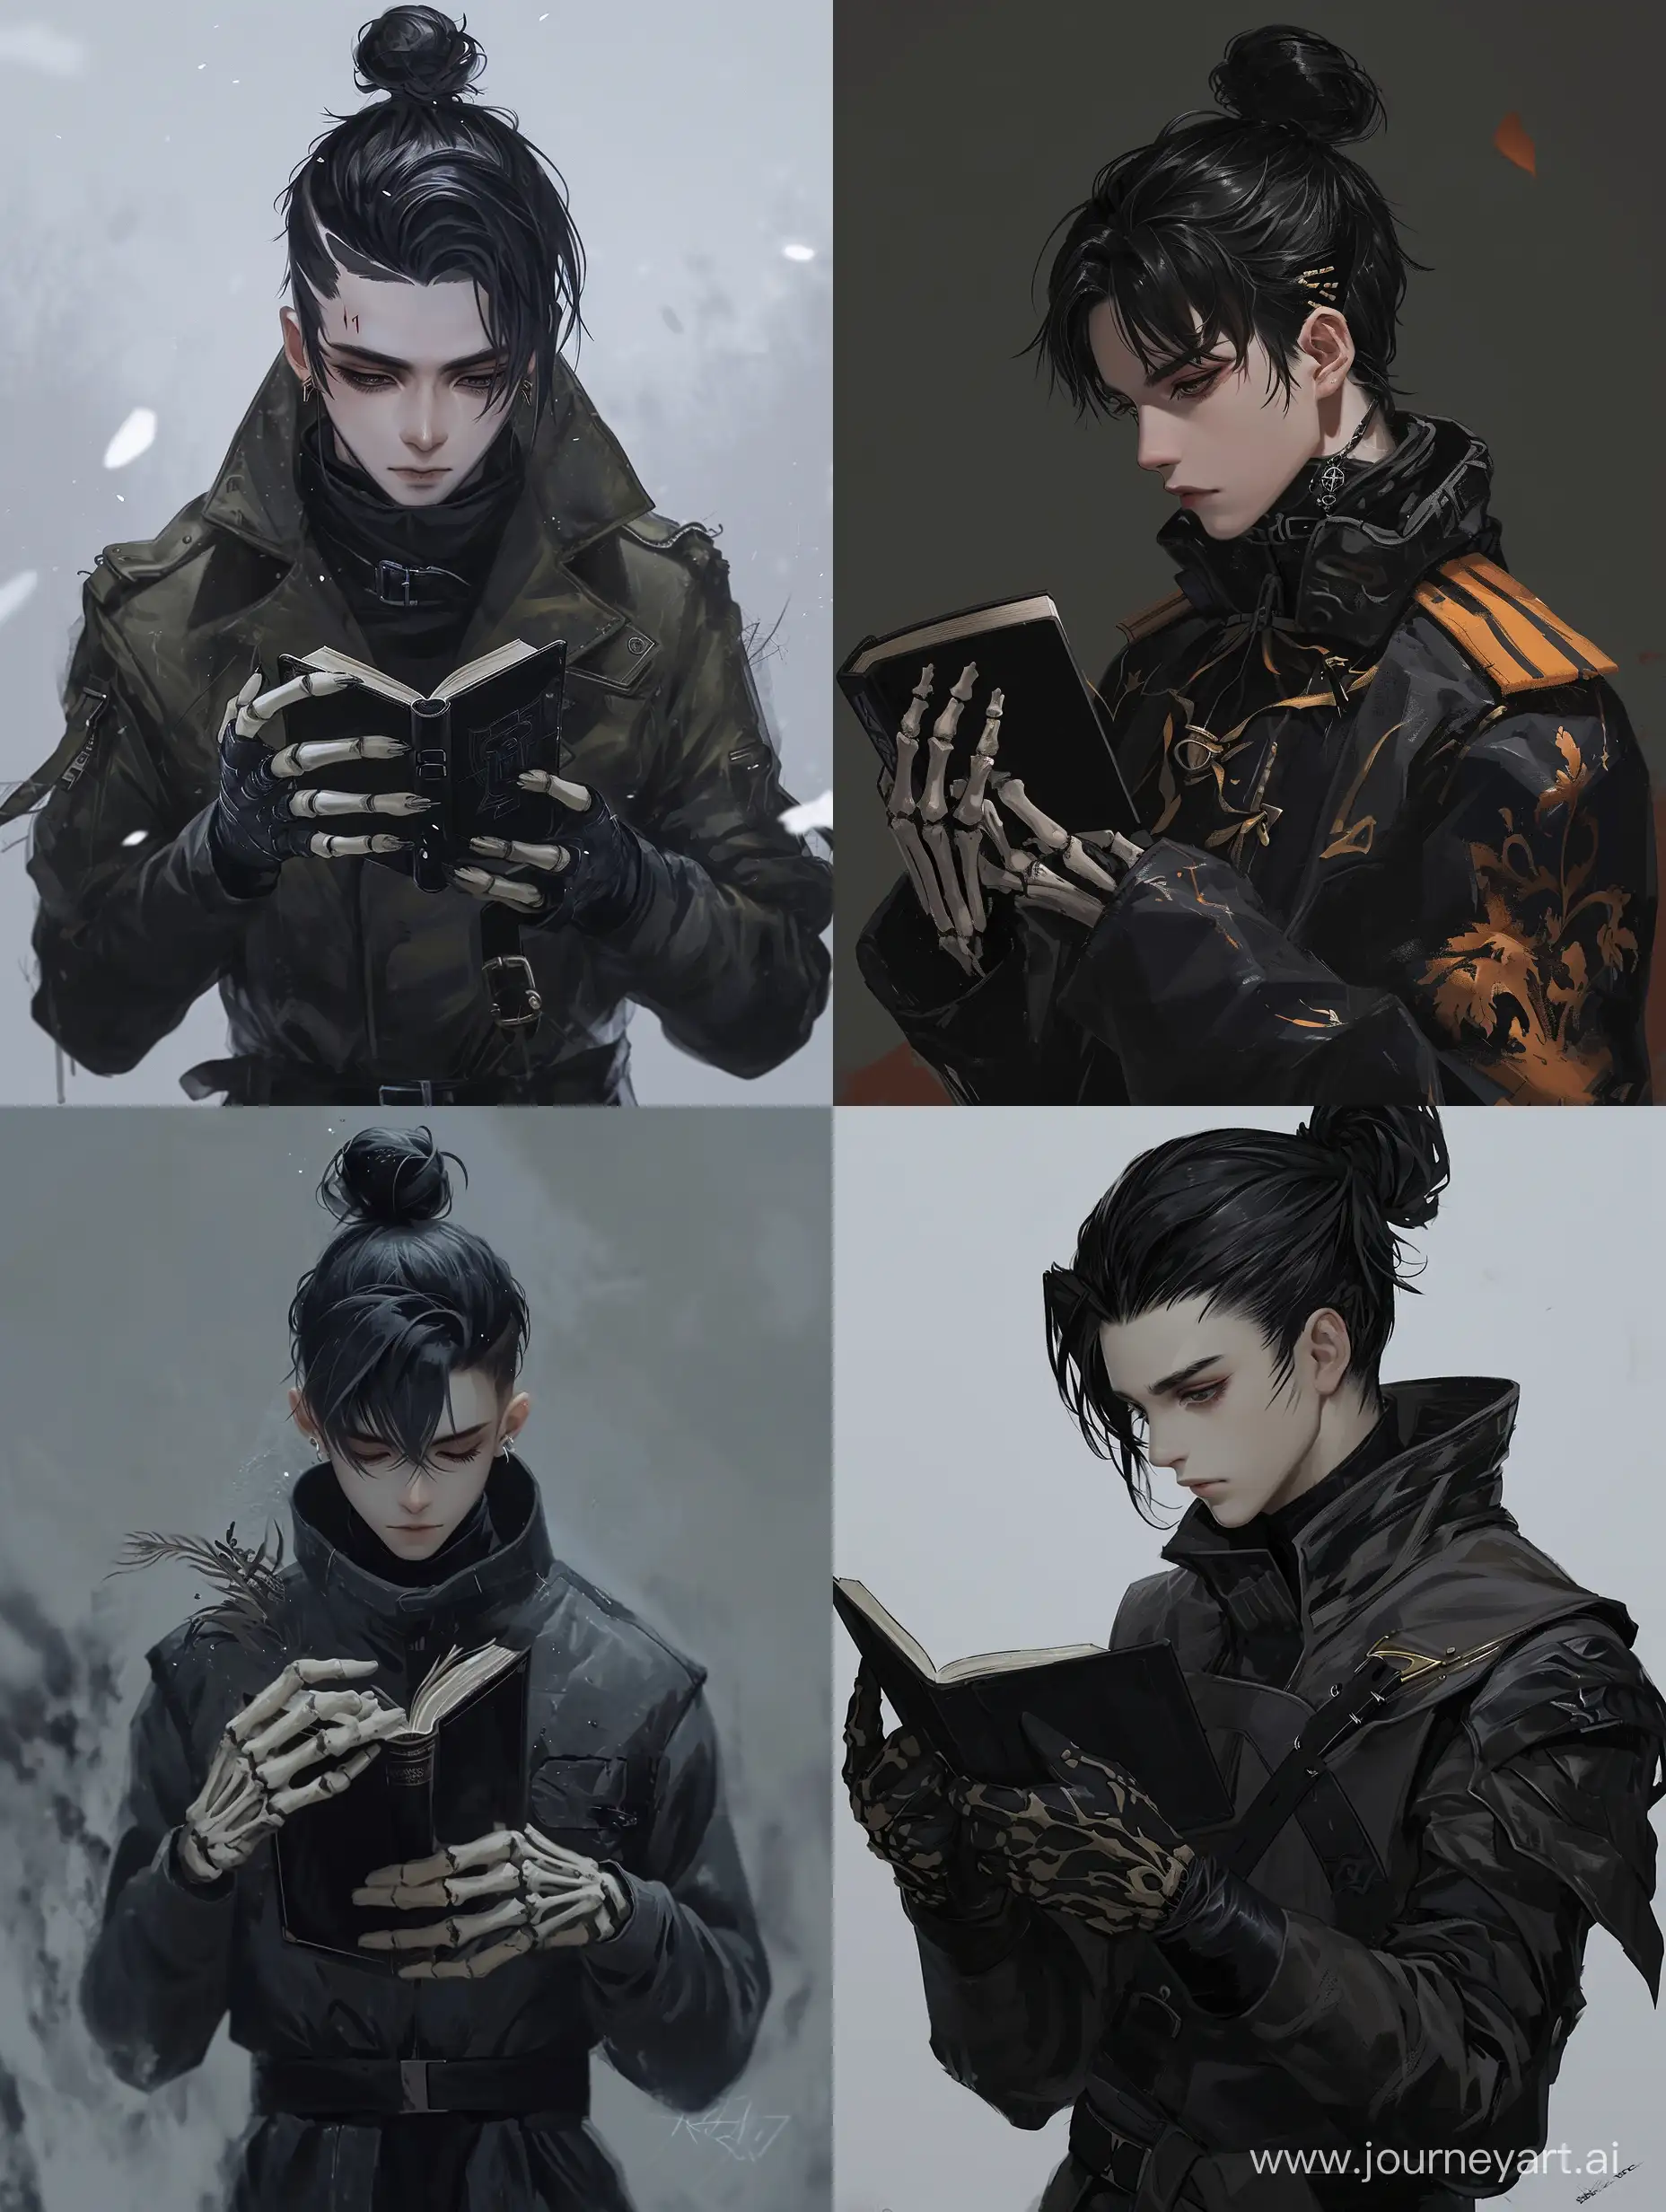 A male anime character, black hair short on the sides, high bun, leader jacket, noir dark fantasy ambient, bone gloves, black little book in hands